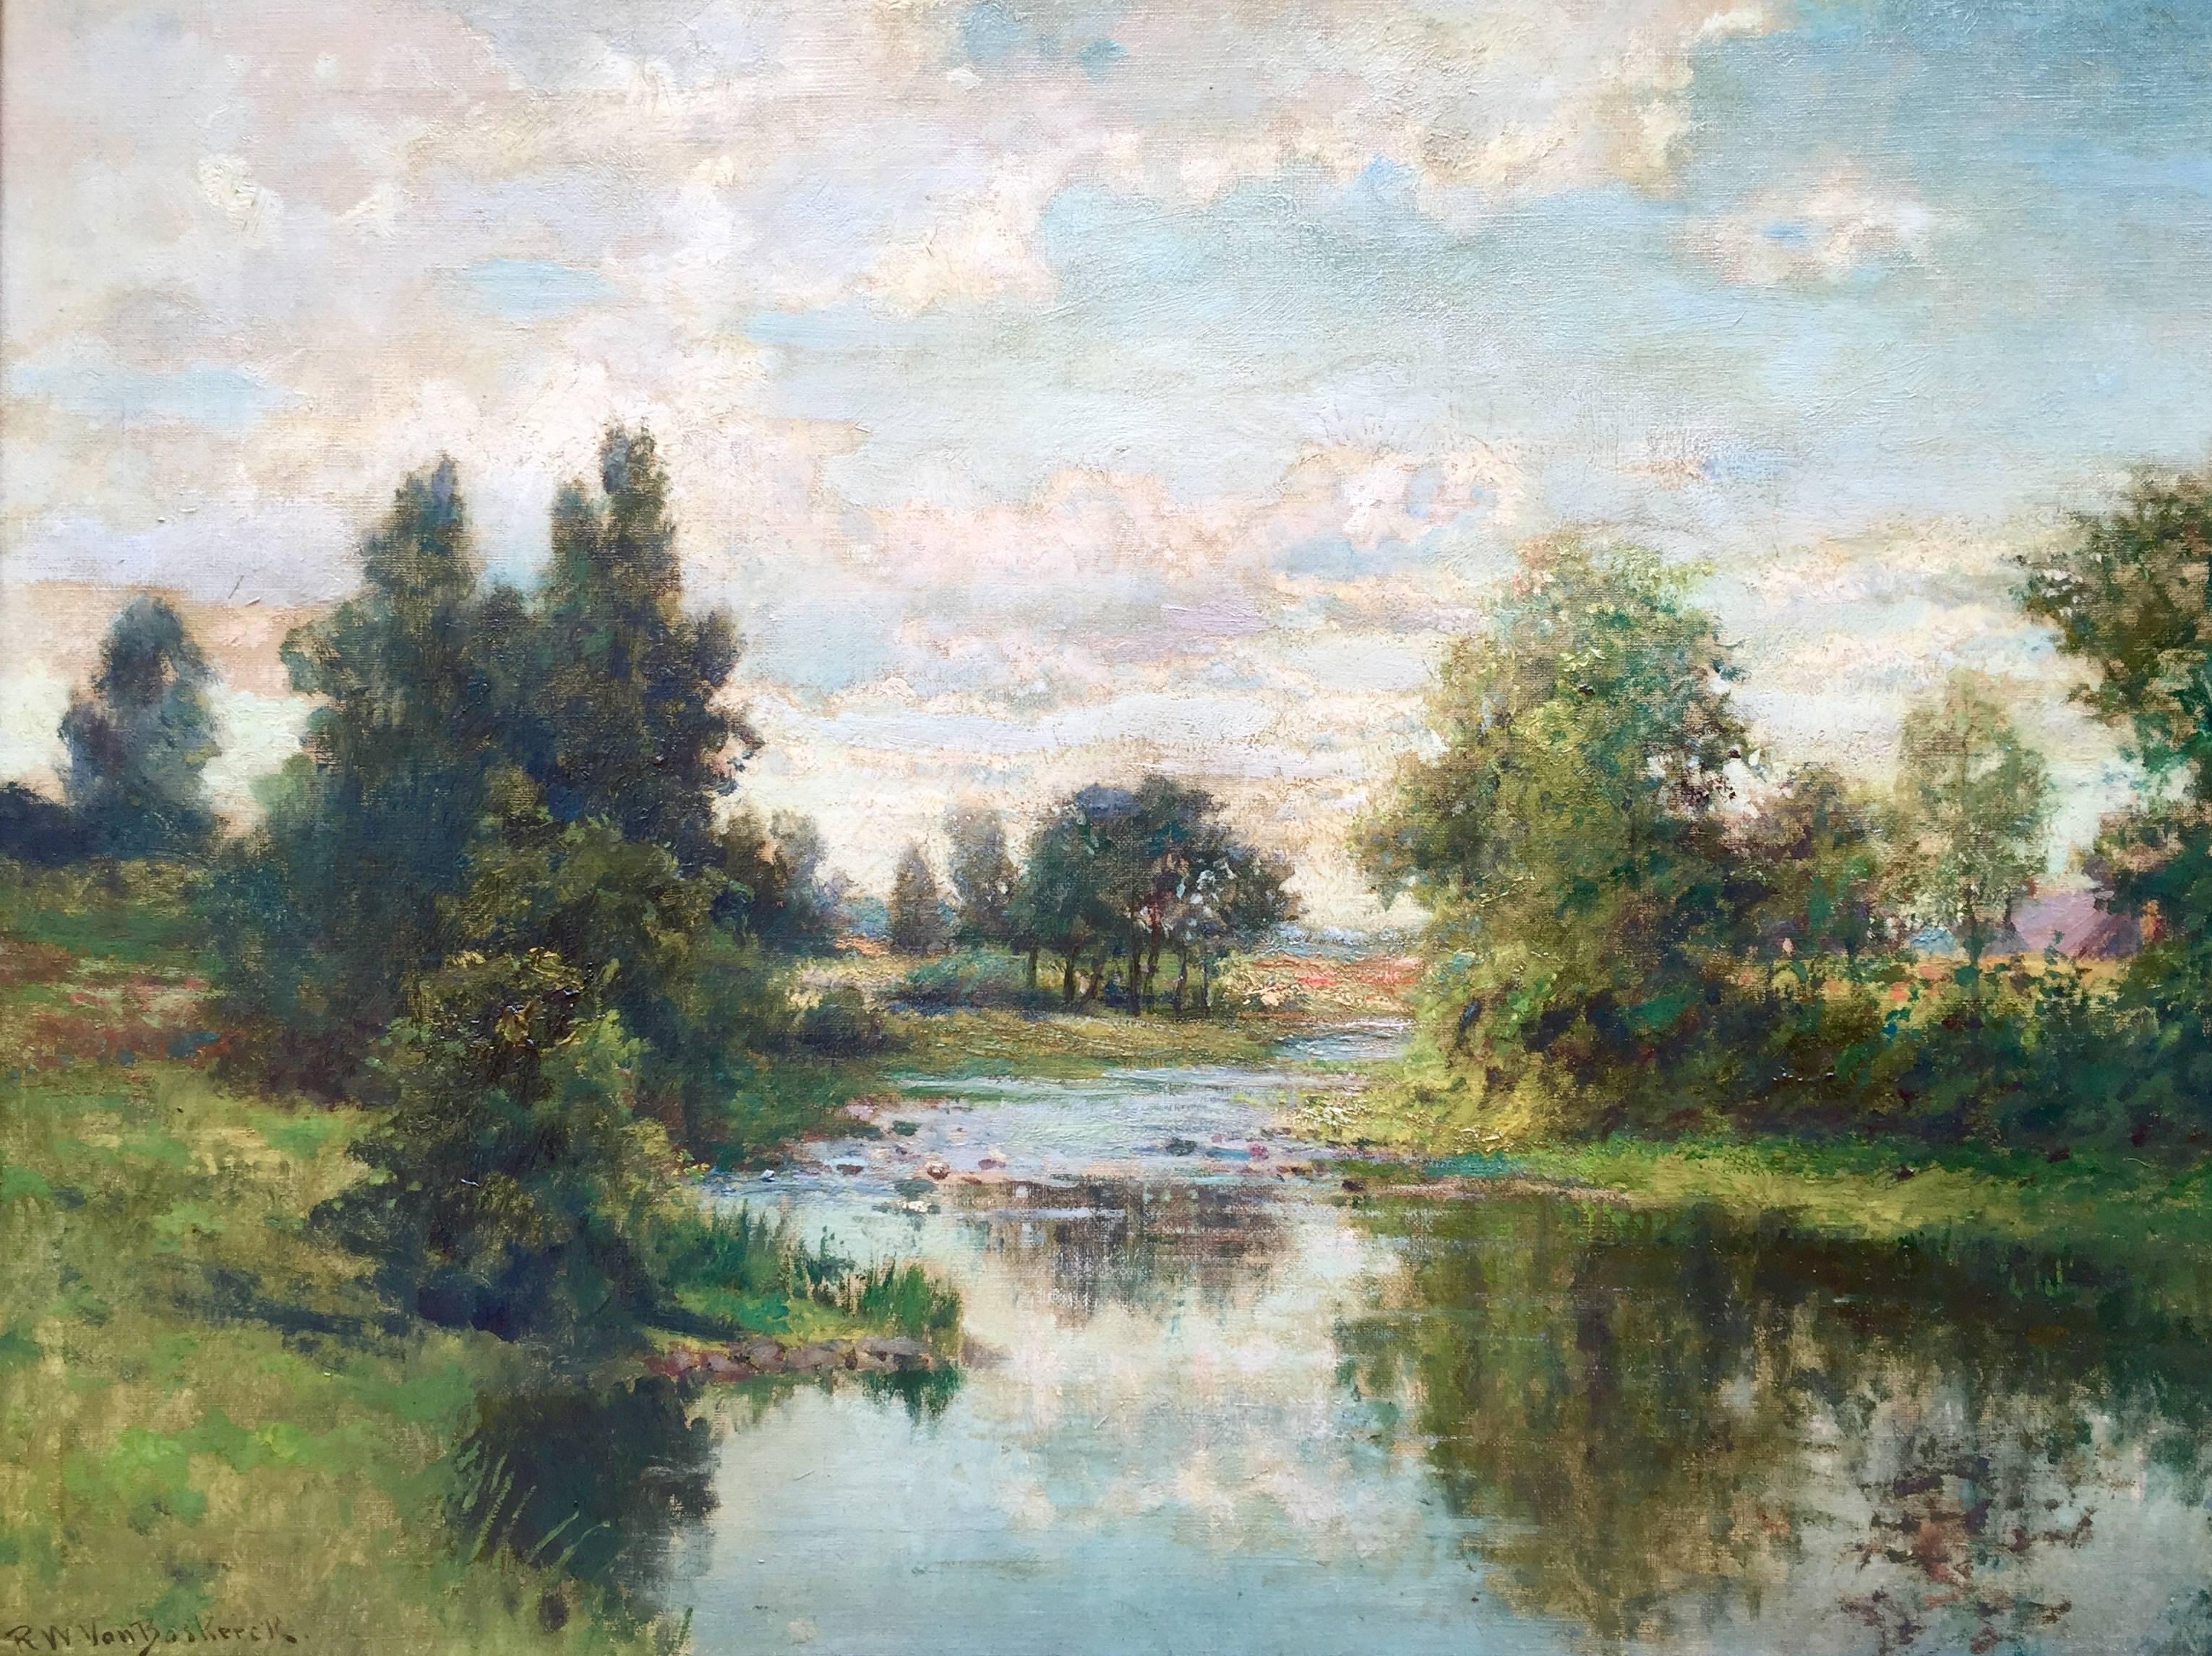 Robert Ward van Boskerck Landscape Painting - "Springtime"